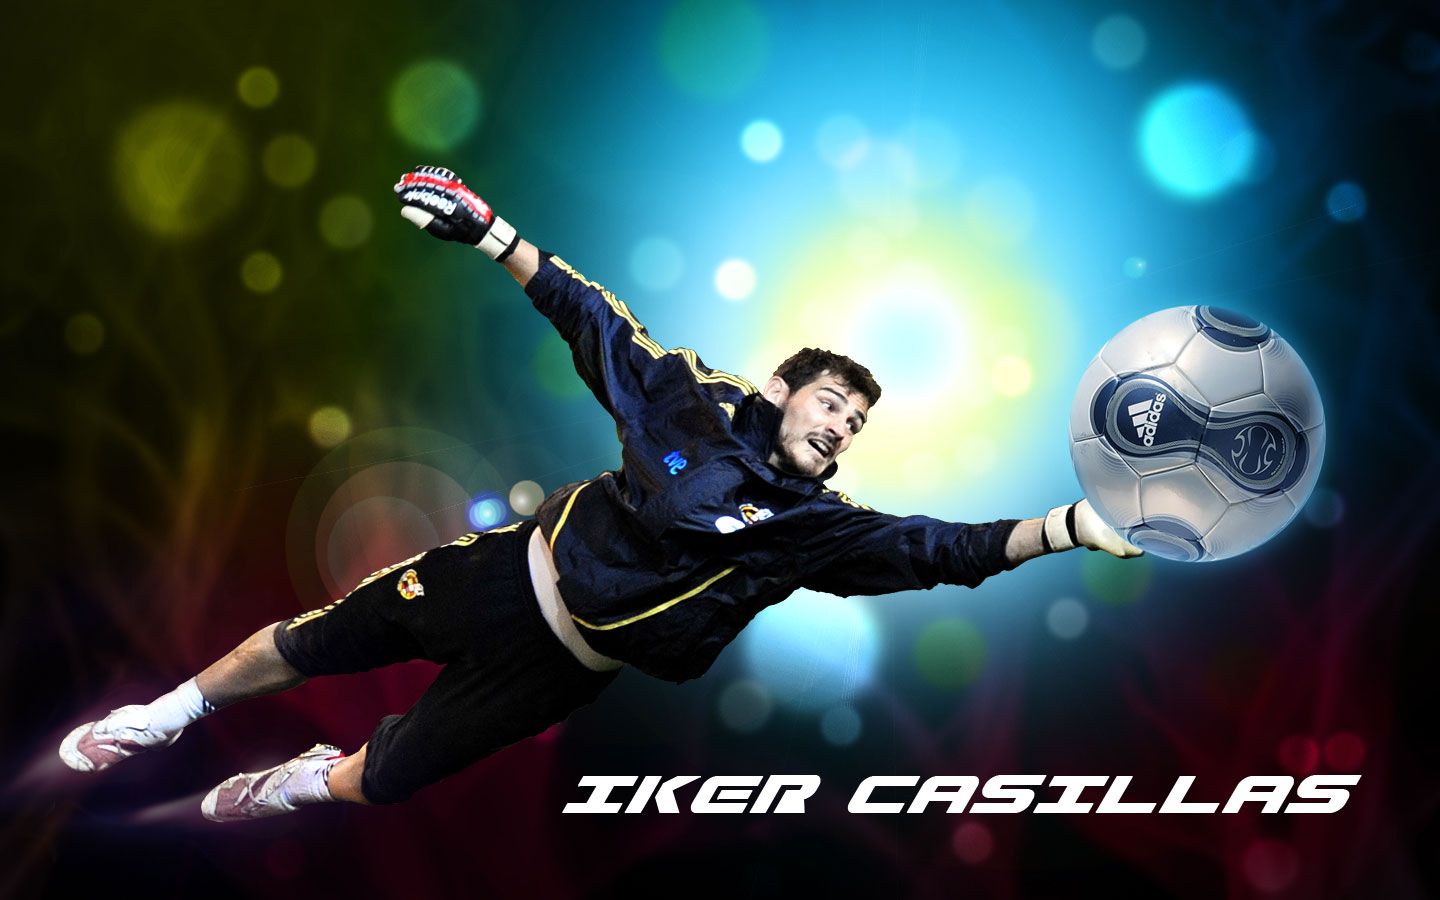 Deskripsi : Wallpaper Casillas Catch, size: 1440x900